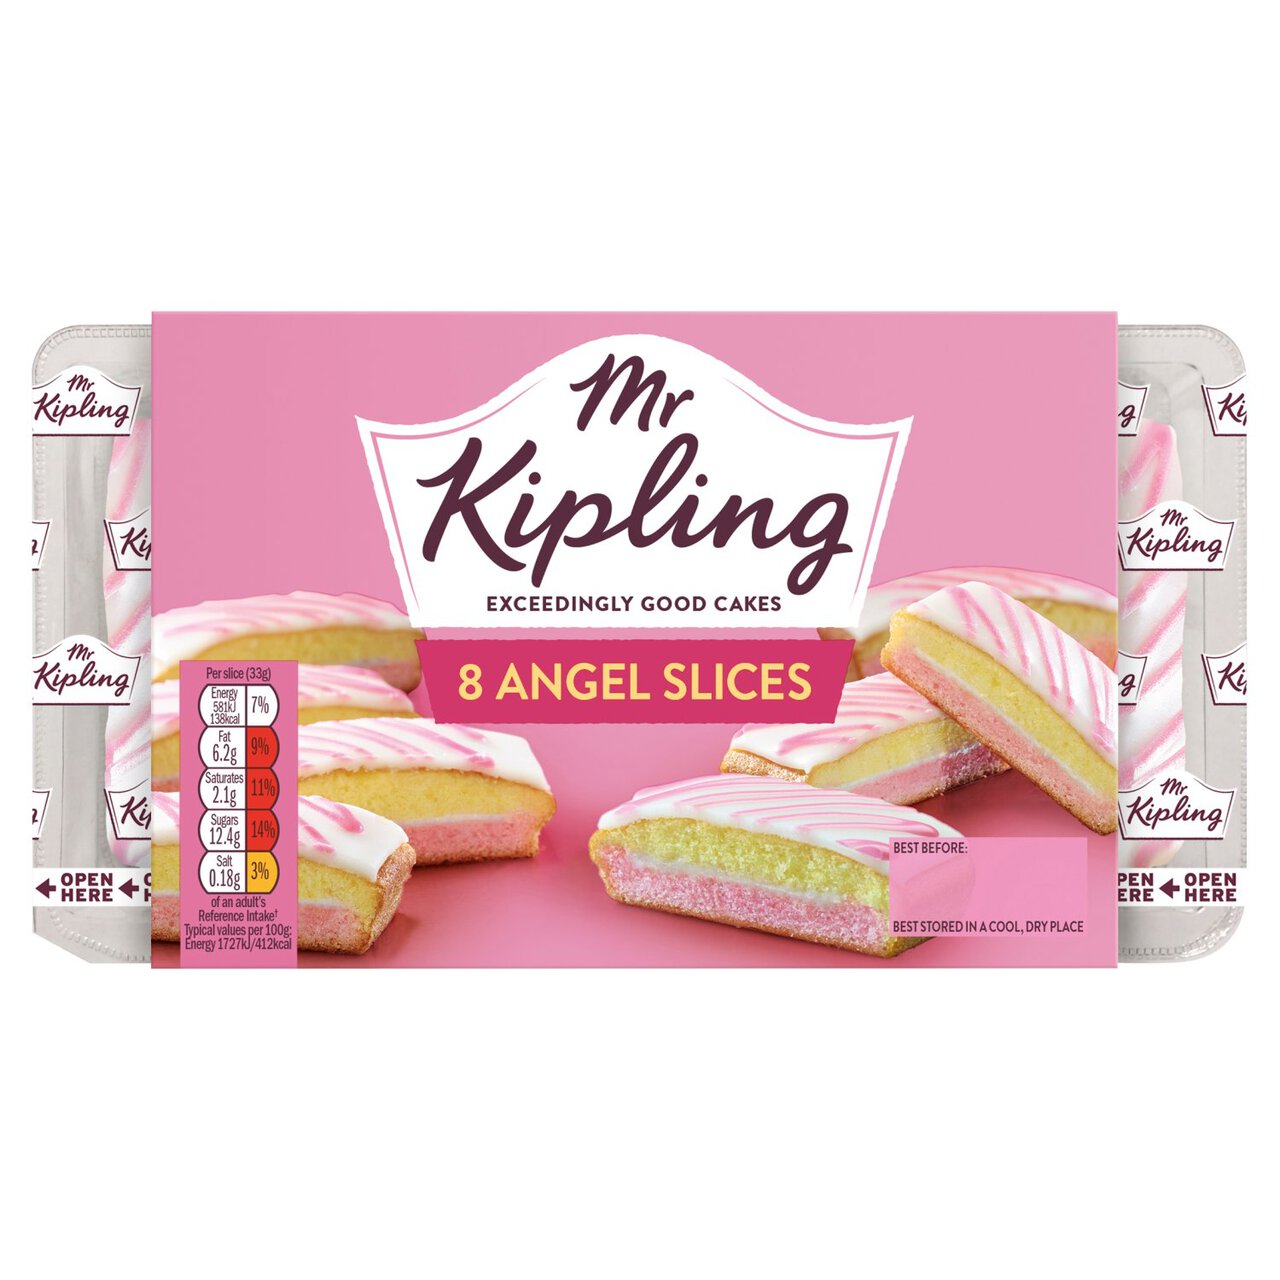 Mr Kipling Angel Slices 8 per pack